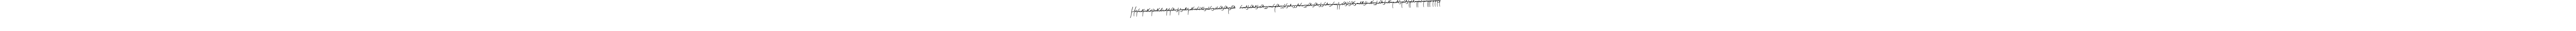 Also You can easily find your signature by using the search form. We will create Hbjfrvdjhxdfvbjhksdfvfhsvdjbhjfdrzghjlgsrdhljvdfiusrfzhlhhgrehfiugsvkhufdgifdaygffds*fuoadghufdadghusfdagguisaefuyfdasgighfgadsogugdafsouggafdsugfdasghgifudasgofarejhjvsfdghfgfdfgvauddhghkucdfagghvfdaghuidfaiyuvdsfgiyufdgfyyfdvryysetryrrsyyyruyryrygy( name handwritten signature images for you free of cost using Arty Signature sign style. Hbjfrvdjhxdfvbjhksdfvfhsvdjbhjfdrzghjlgsrdhljvdfiusrfzhlhhgrehfiugsvkhufdgifdaygffds*fuoadghufdadghusfdagguisaefuyfdasgighfgadsogugdafsouggafdsugfdasghgifudasgofarejhjvsfdghfgfdfgvauddhghkucdfagghvfdaghuidfaiyuvdsfgiyufdgfyyfdvryysetryrrsyyyruyryrygy( signature style 8 images and pictures png